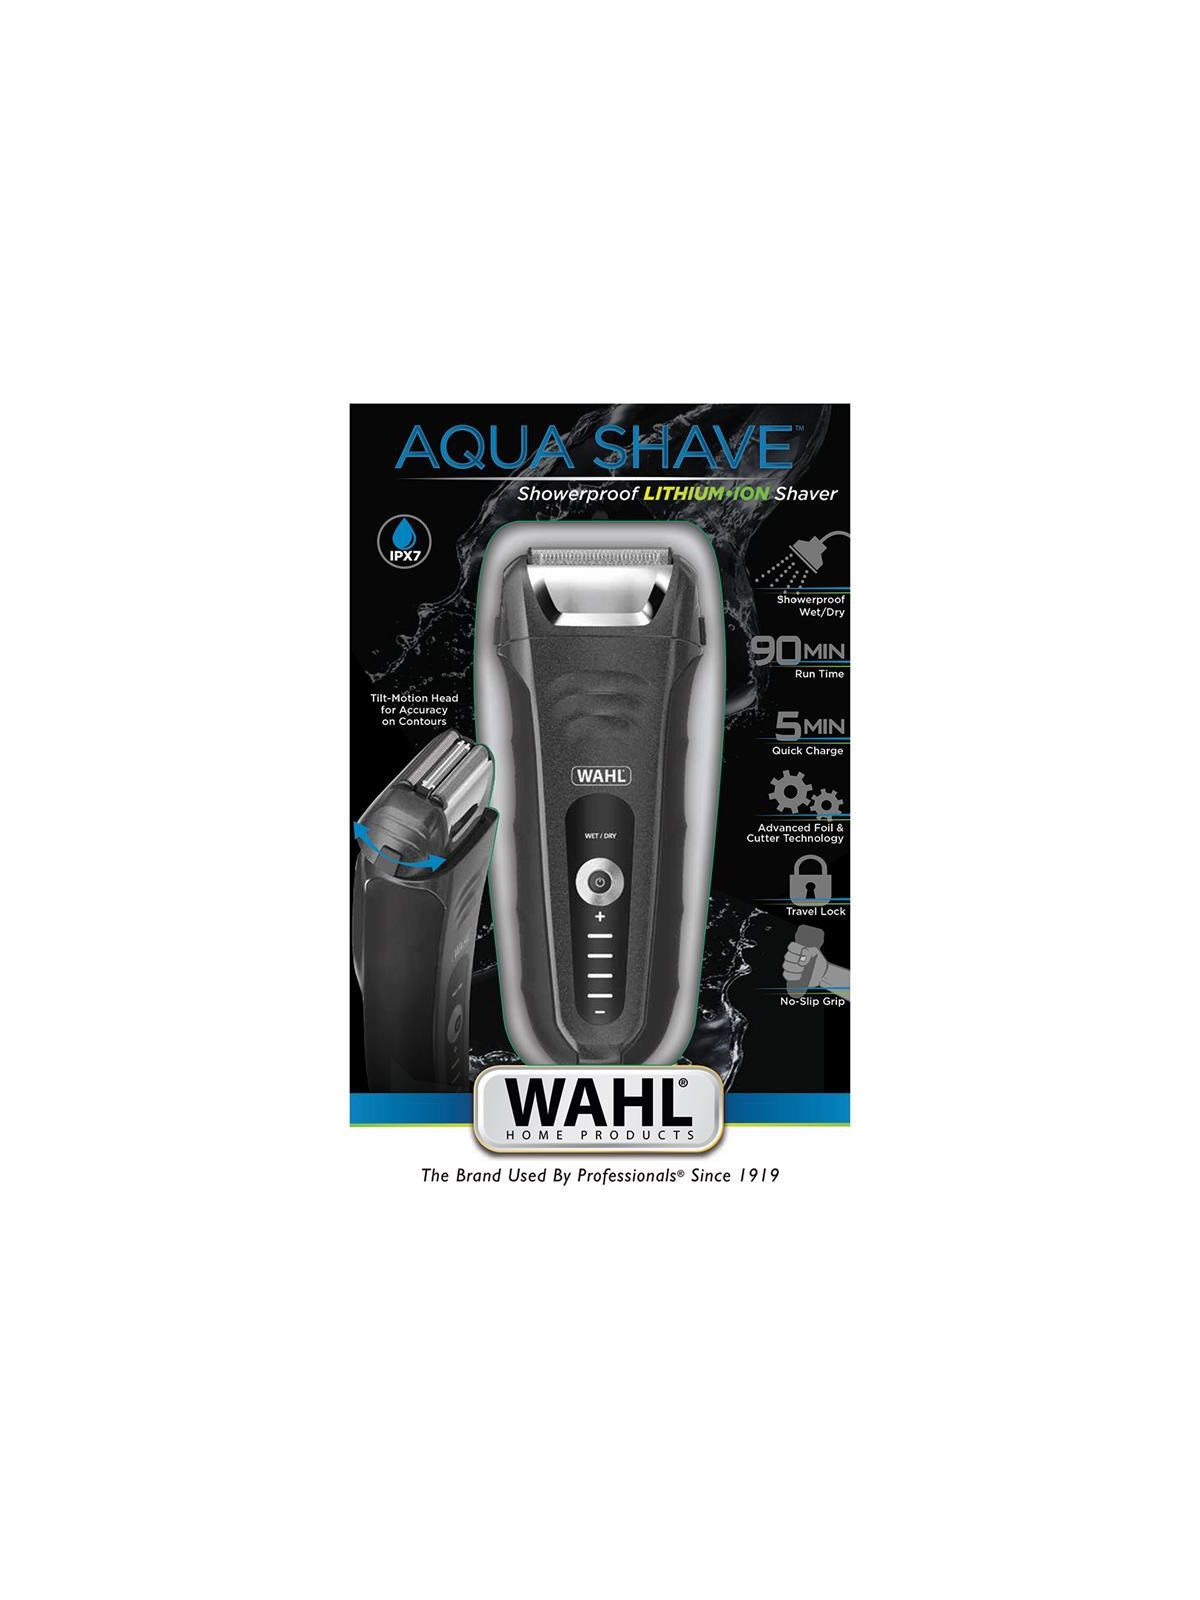 Barzdaskutė Wahl Home Aqua Shave